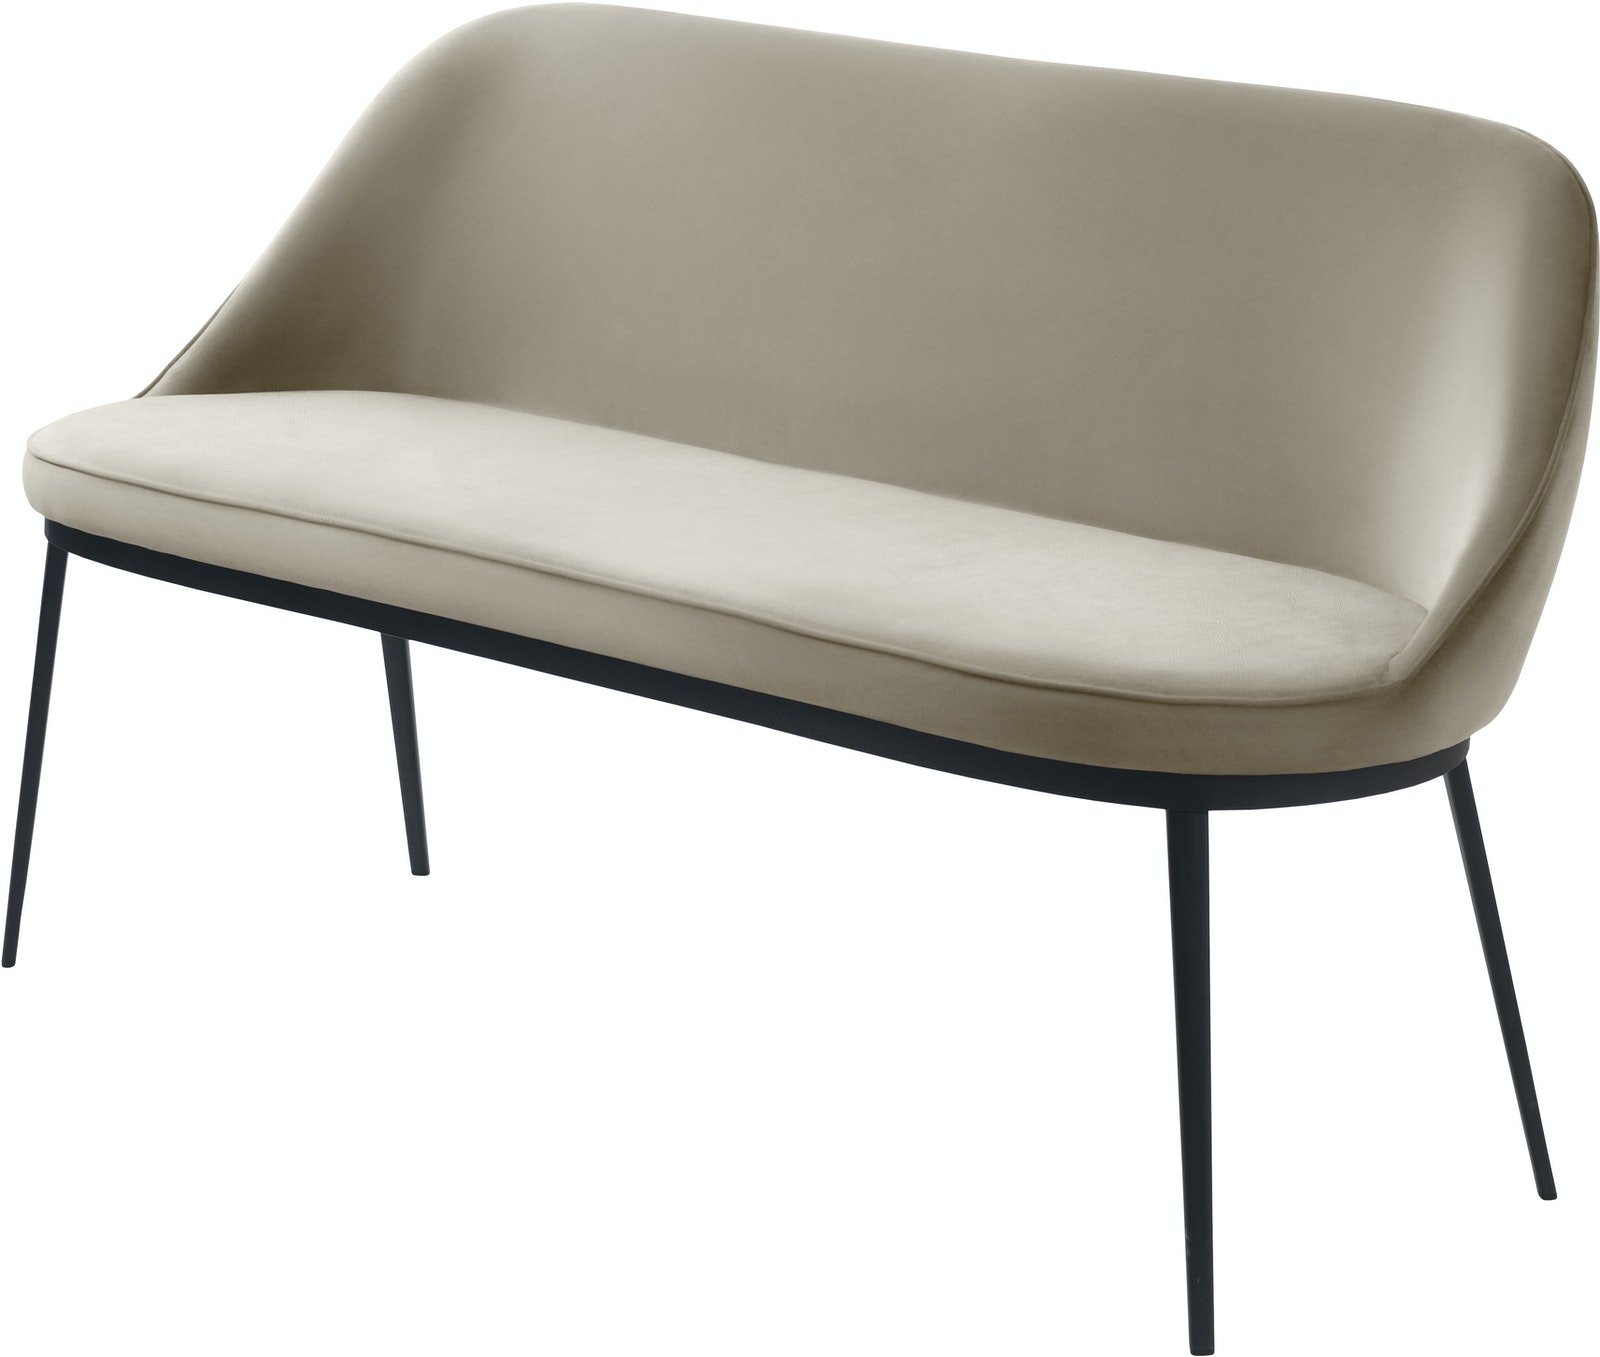 6: Gain, Sofabænk, Læder by Unique Furniture (H: 82,5 cm. x B: 45,5 cm. x L: 144 cm., Beige)